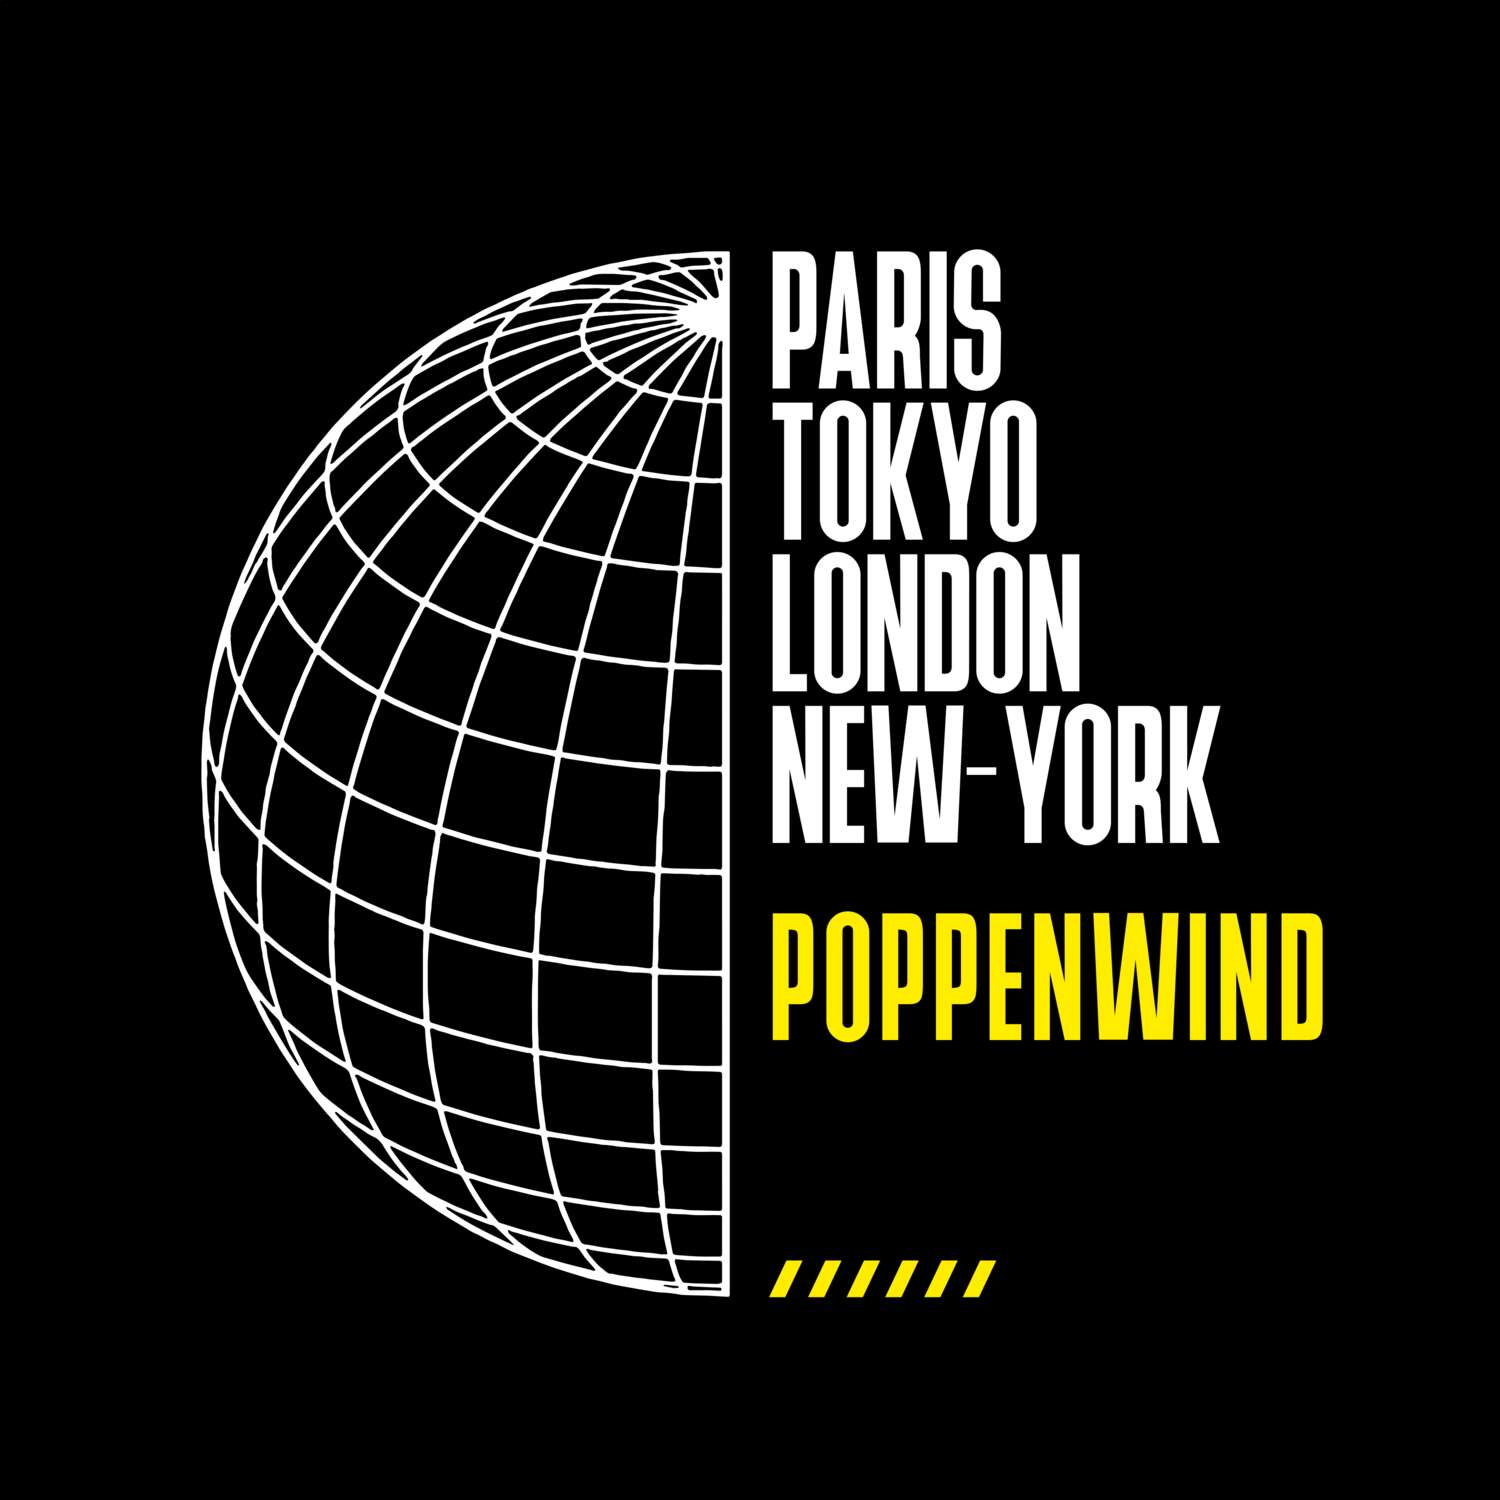 Poppenwind T-Shirt »Paris Tokyo London«